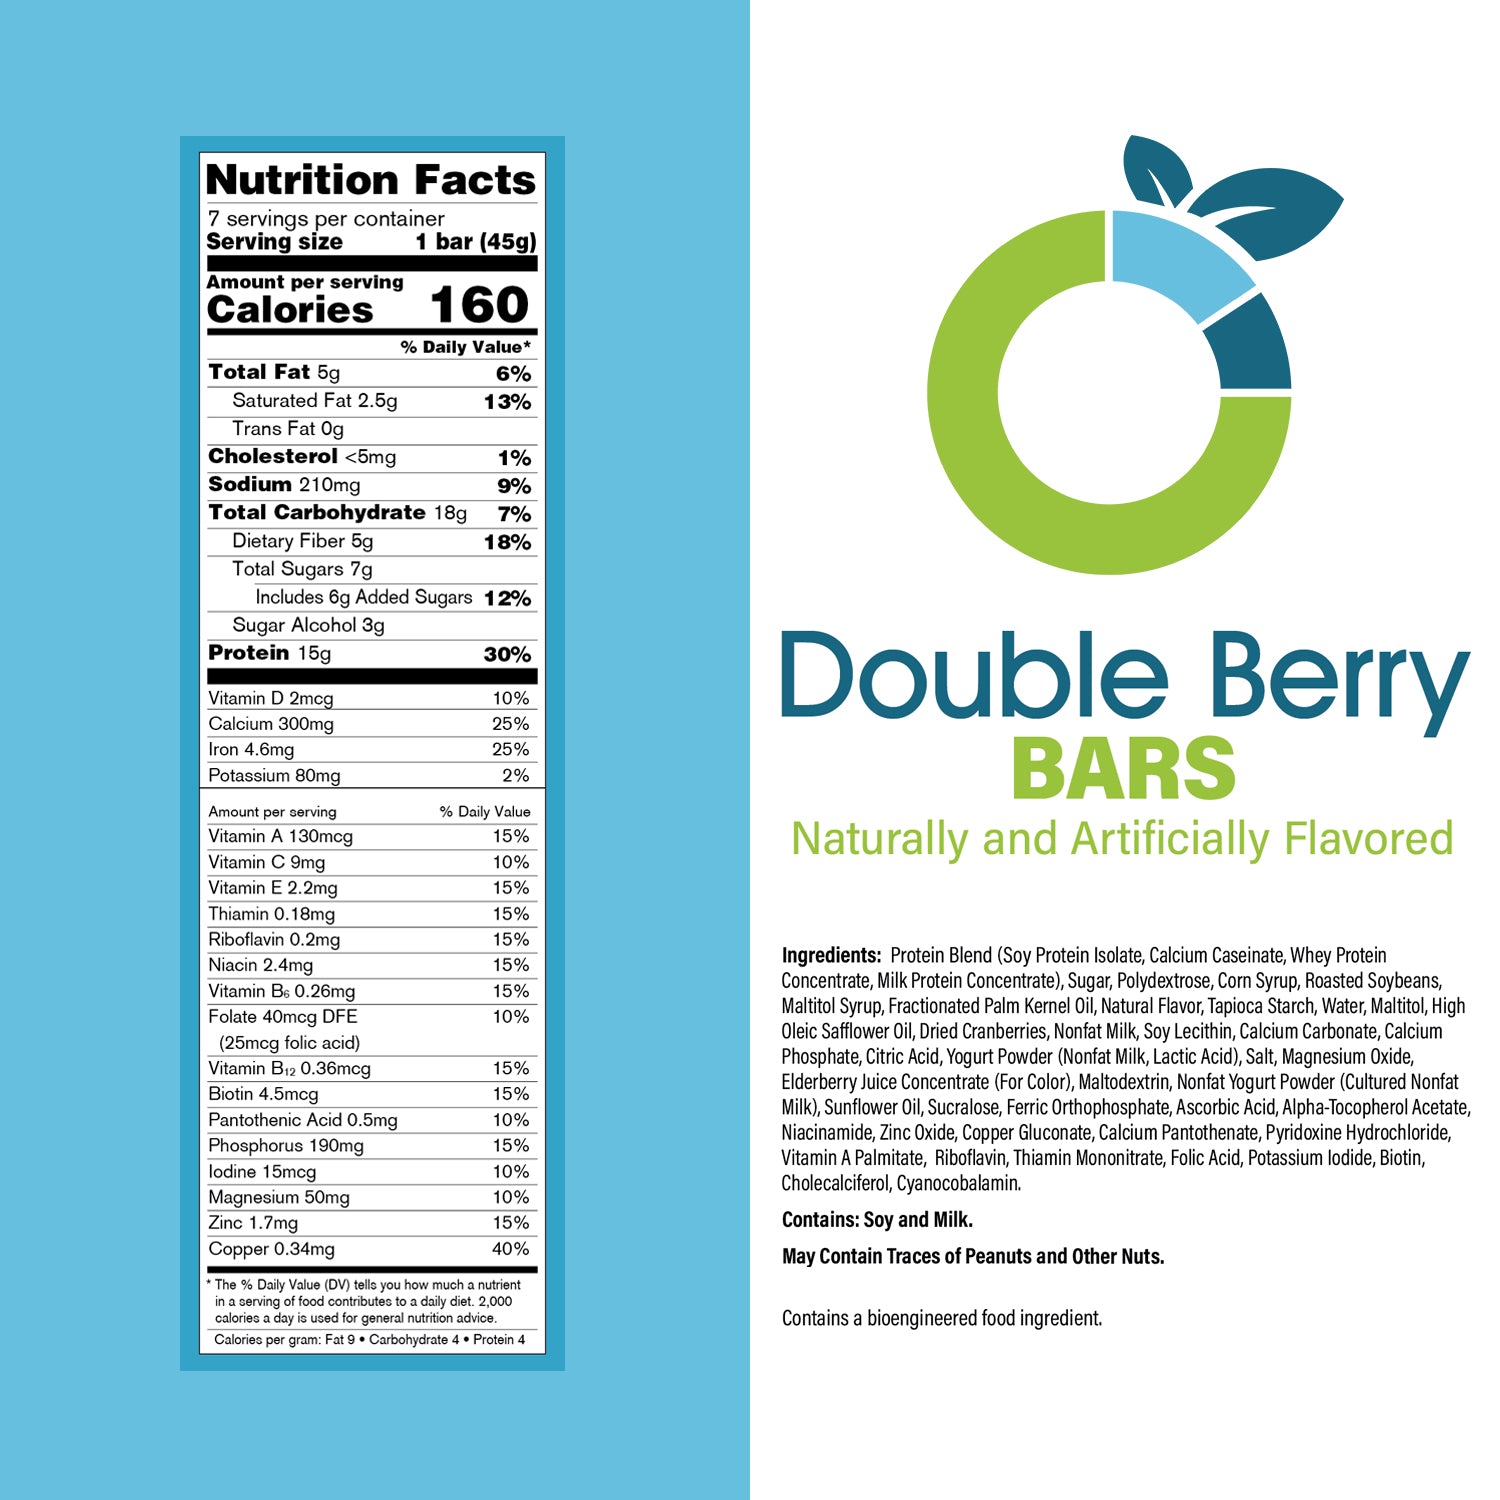 Double Berry Bars